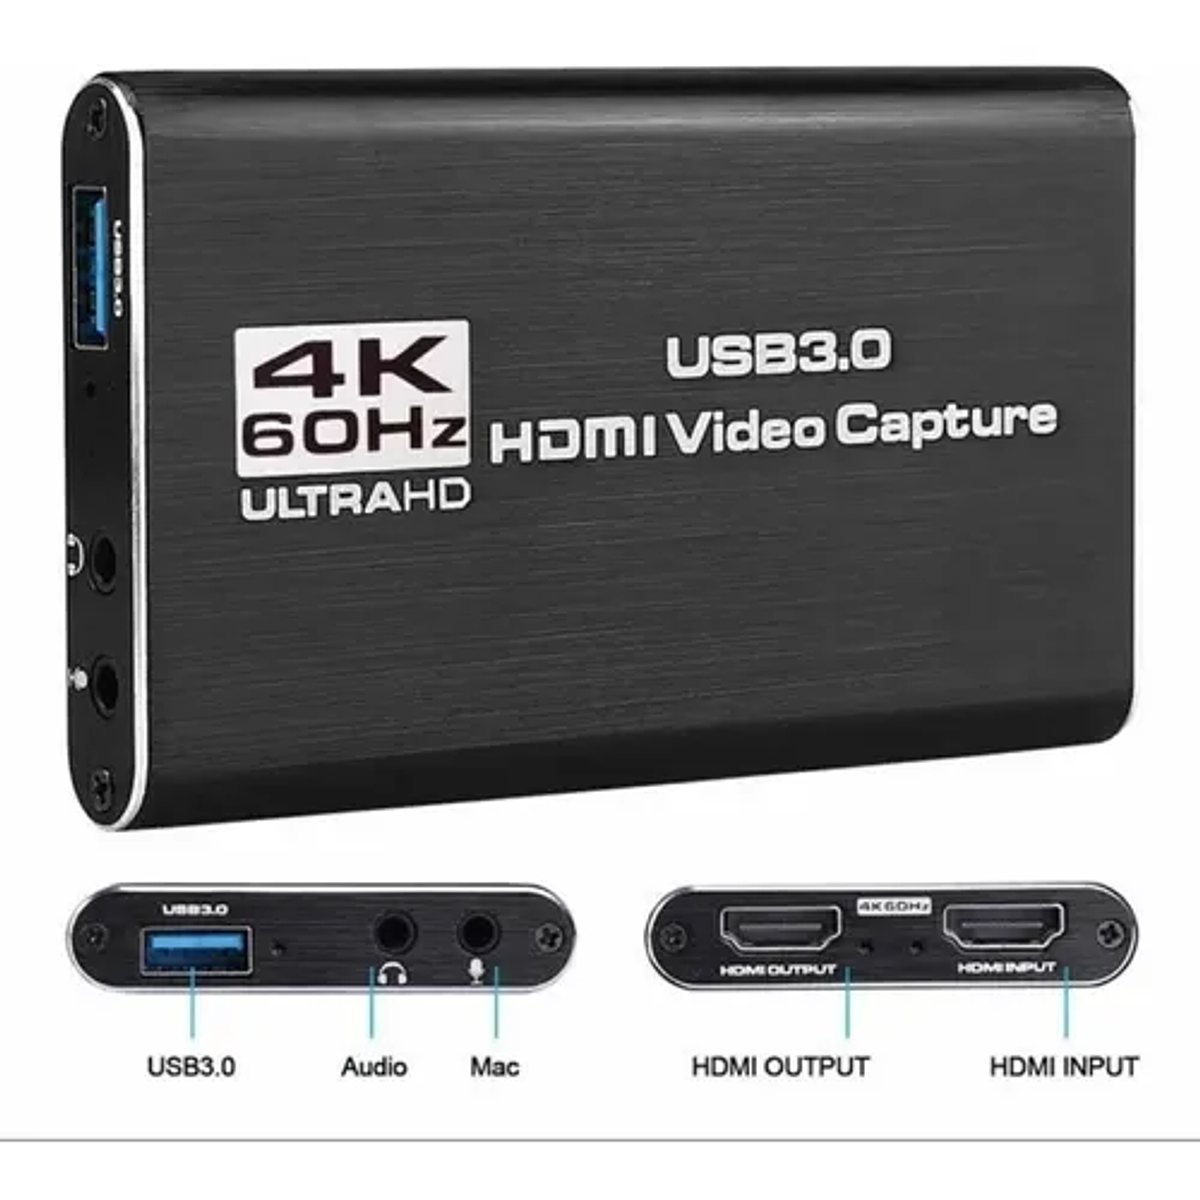 Capturadora Video Hdmi Usb 3.0 4k Multiplataforma + Cable HDMI